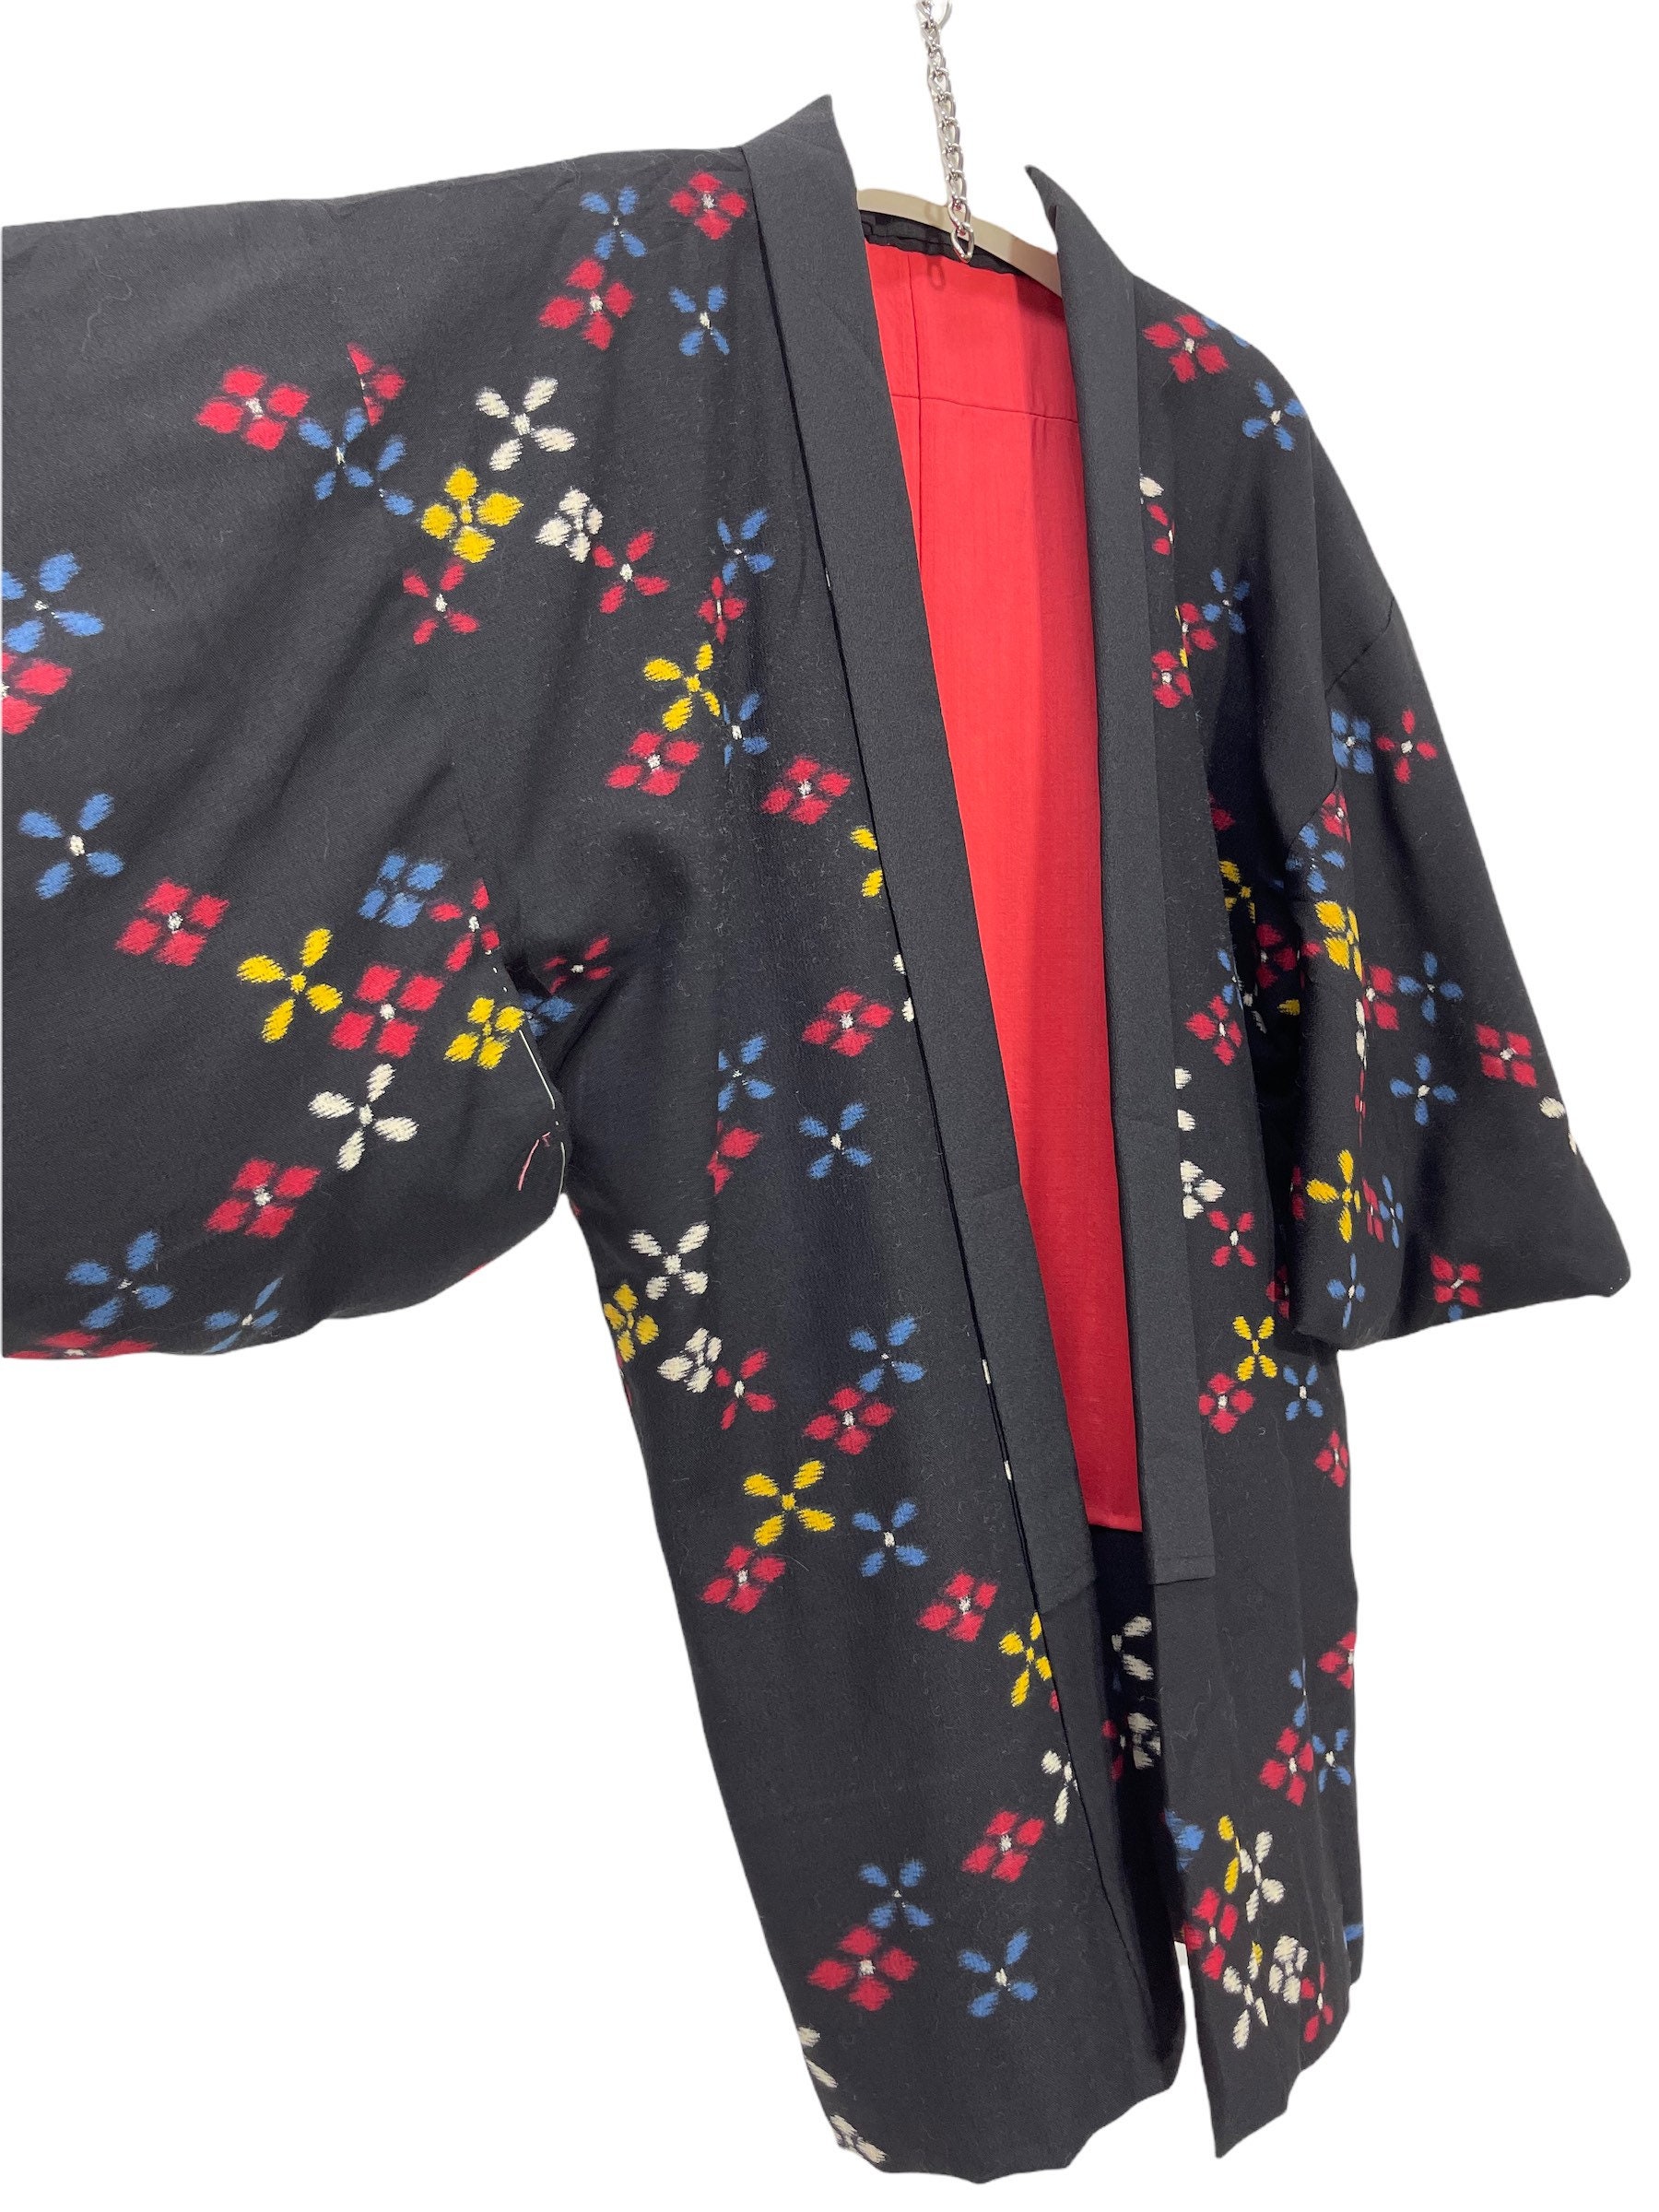 Made in Japan Hanten Wolle Jacke Wattierte Schwarz Kasuri Ikat Blumen Muster Kimono Robe Warme Winterjacke von DONPACINO